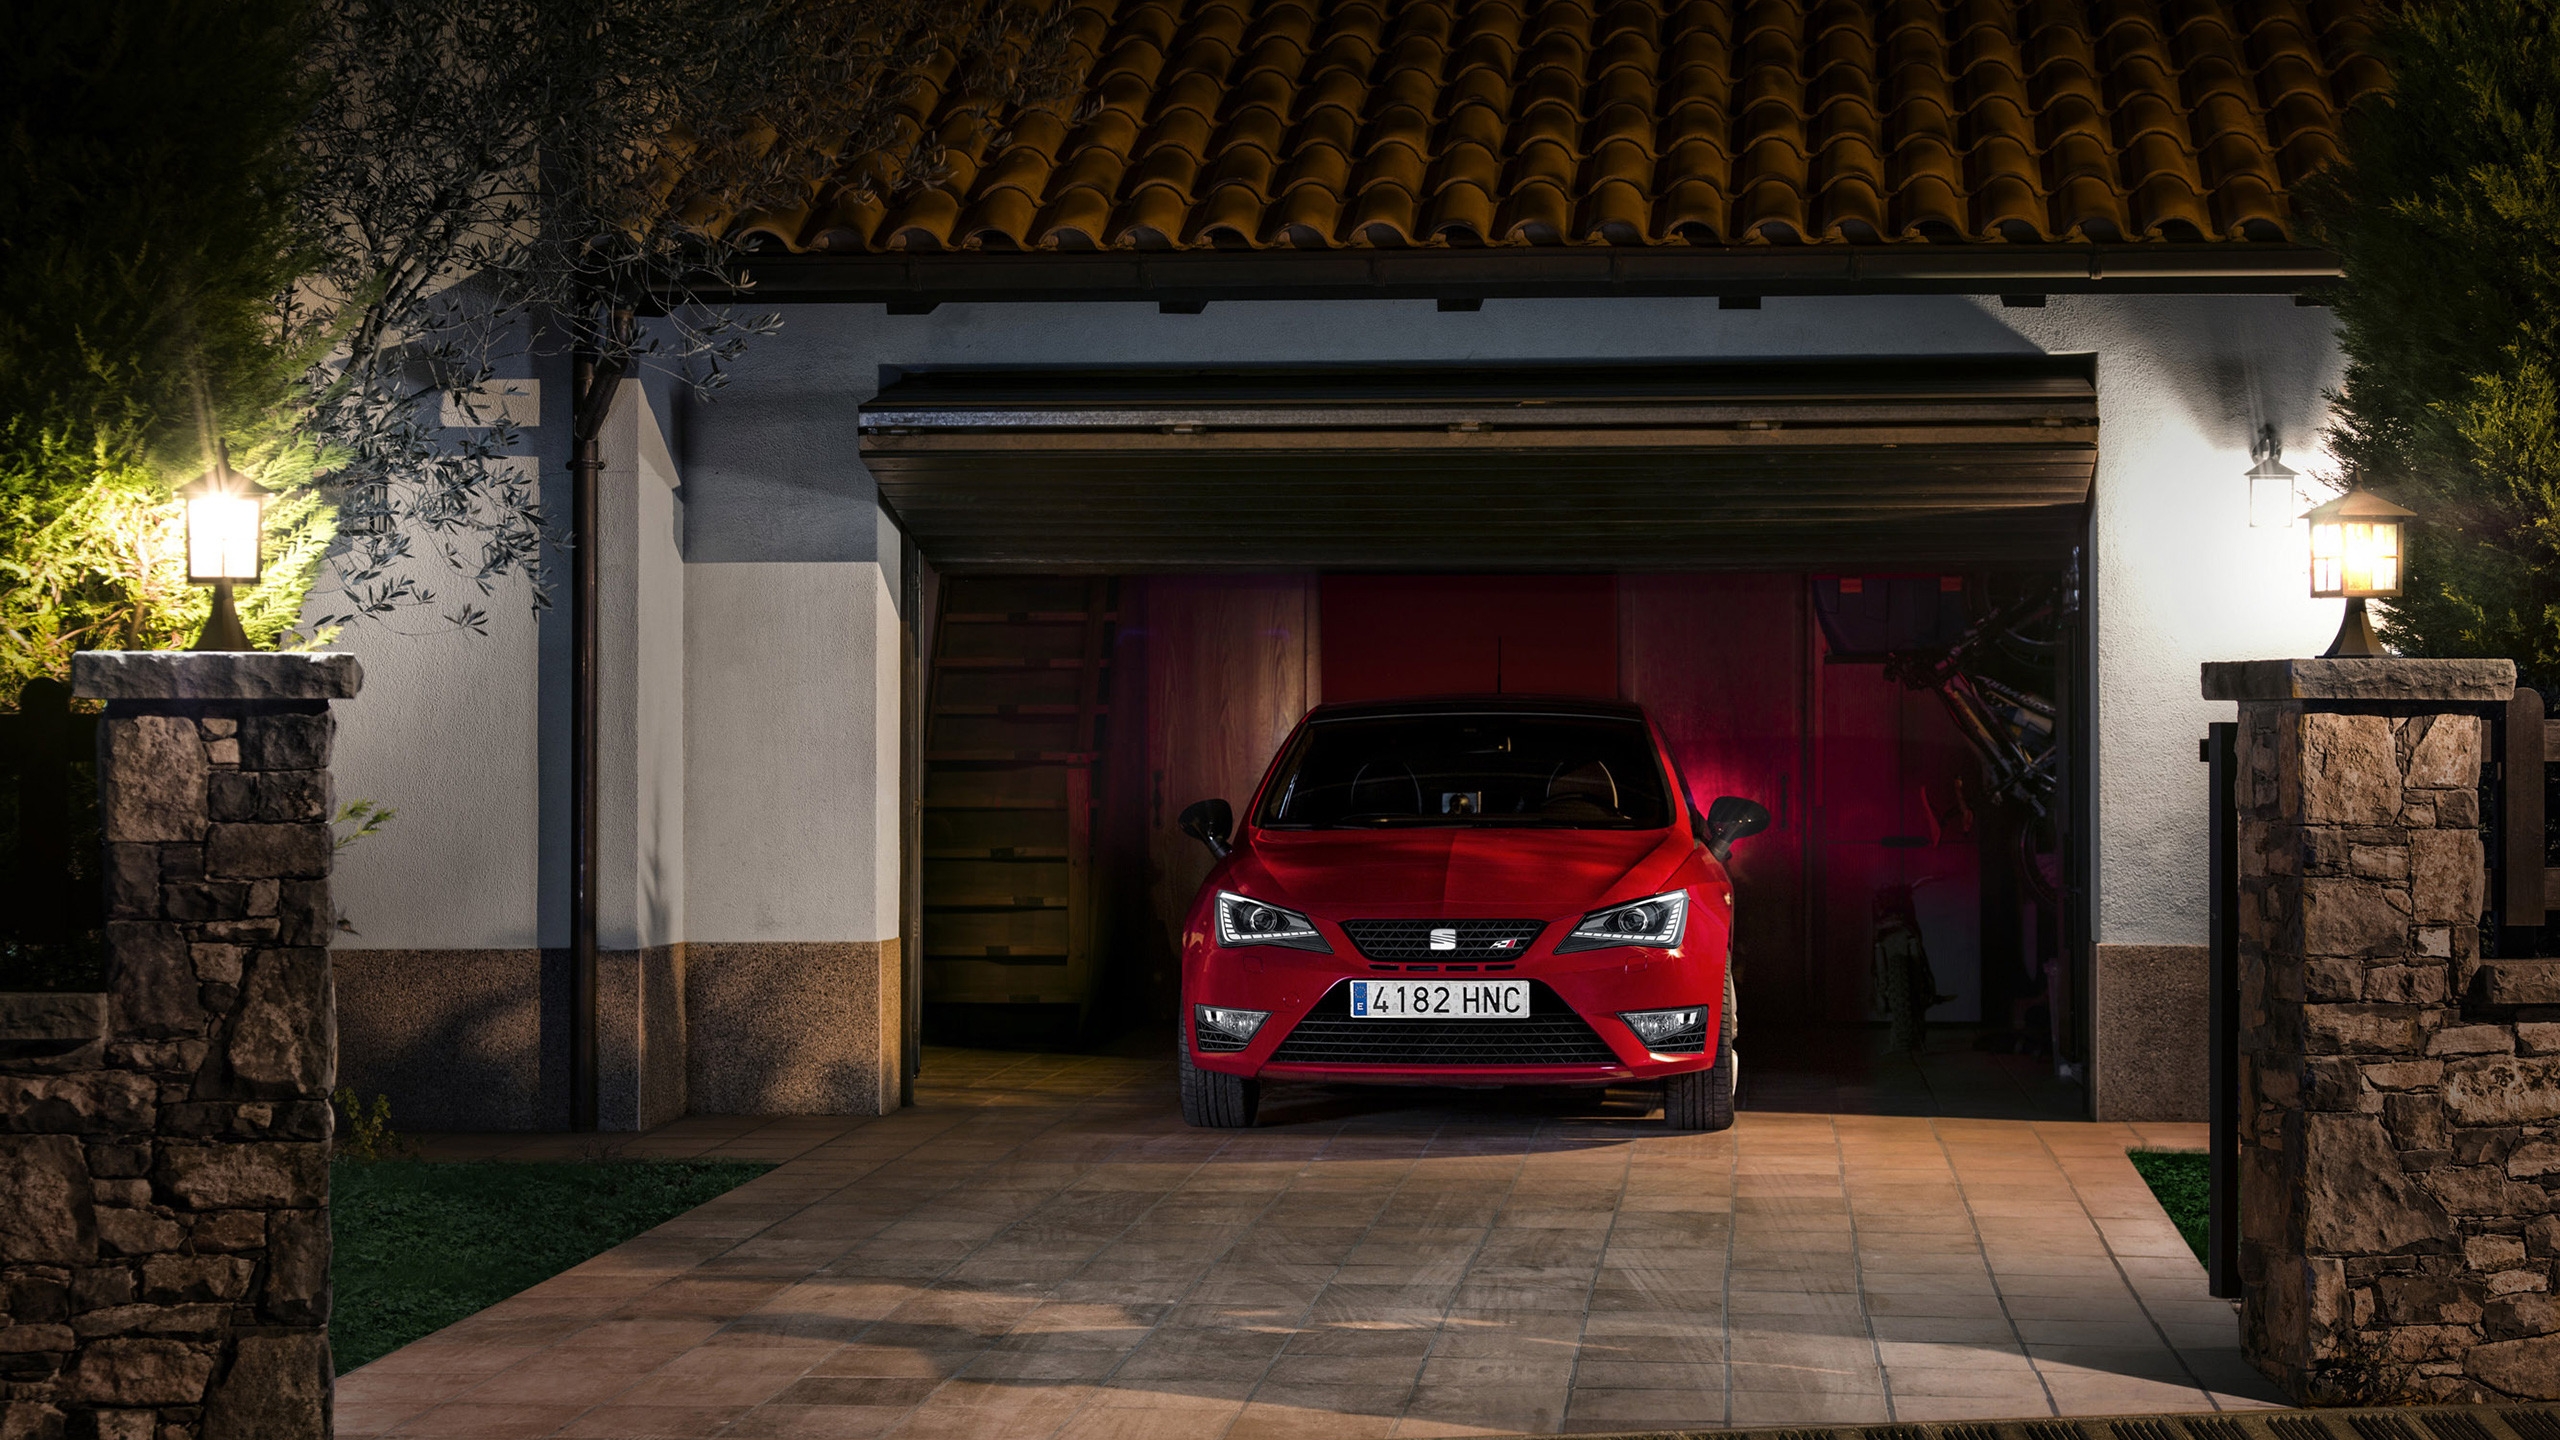 Red Seat Ibiza Cupra 2013 for 2560x1440 HDTV resolution